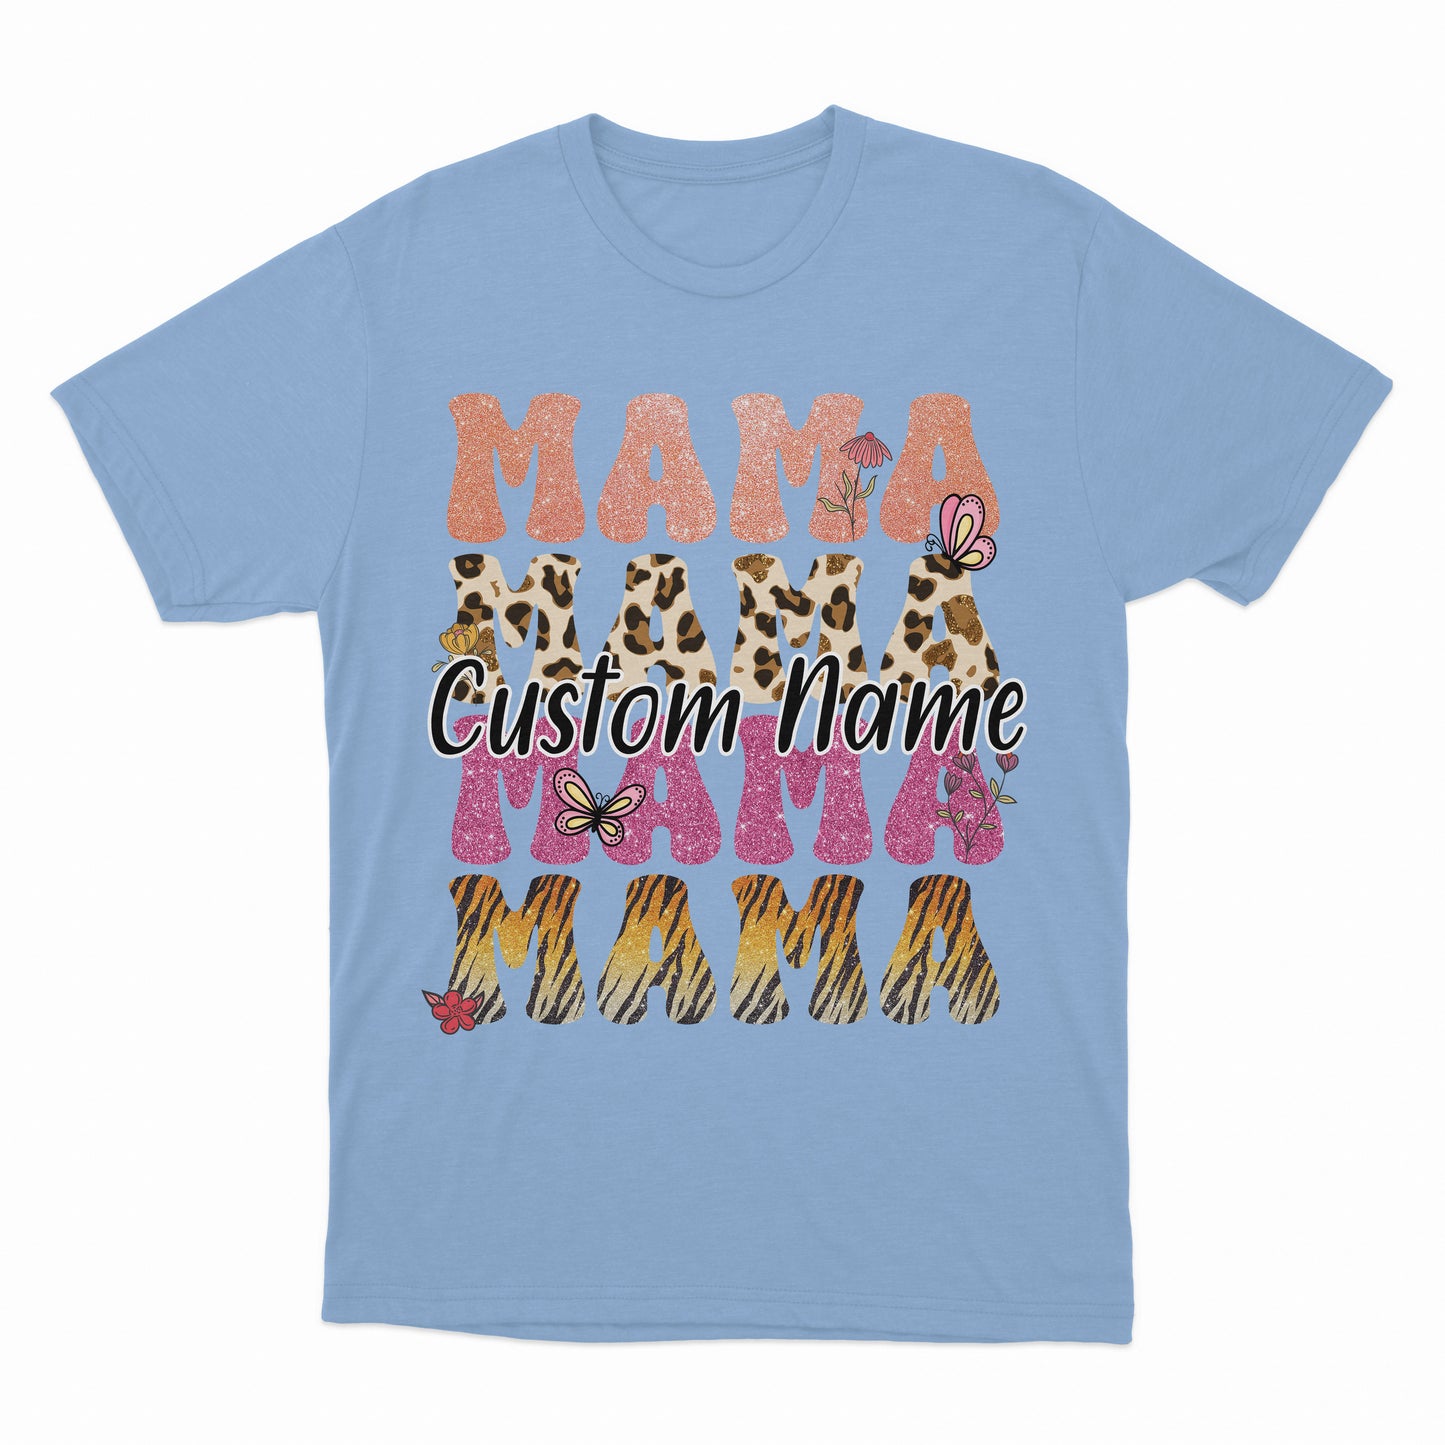 Customized Mama Shirt, Retro Floral Mama Shirt, Mothers Day Shirt Gift, Present For Mom, Mama Retro Groovt Shirt, Personalized Shirt For Mother's Day, Animal Floral Pattern Shirt